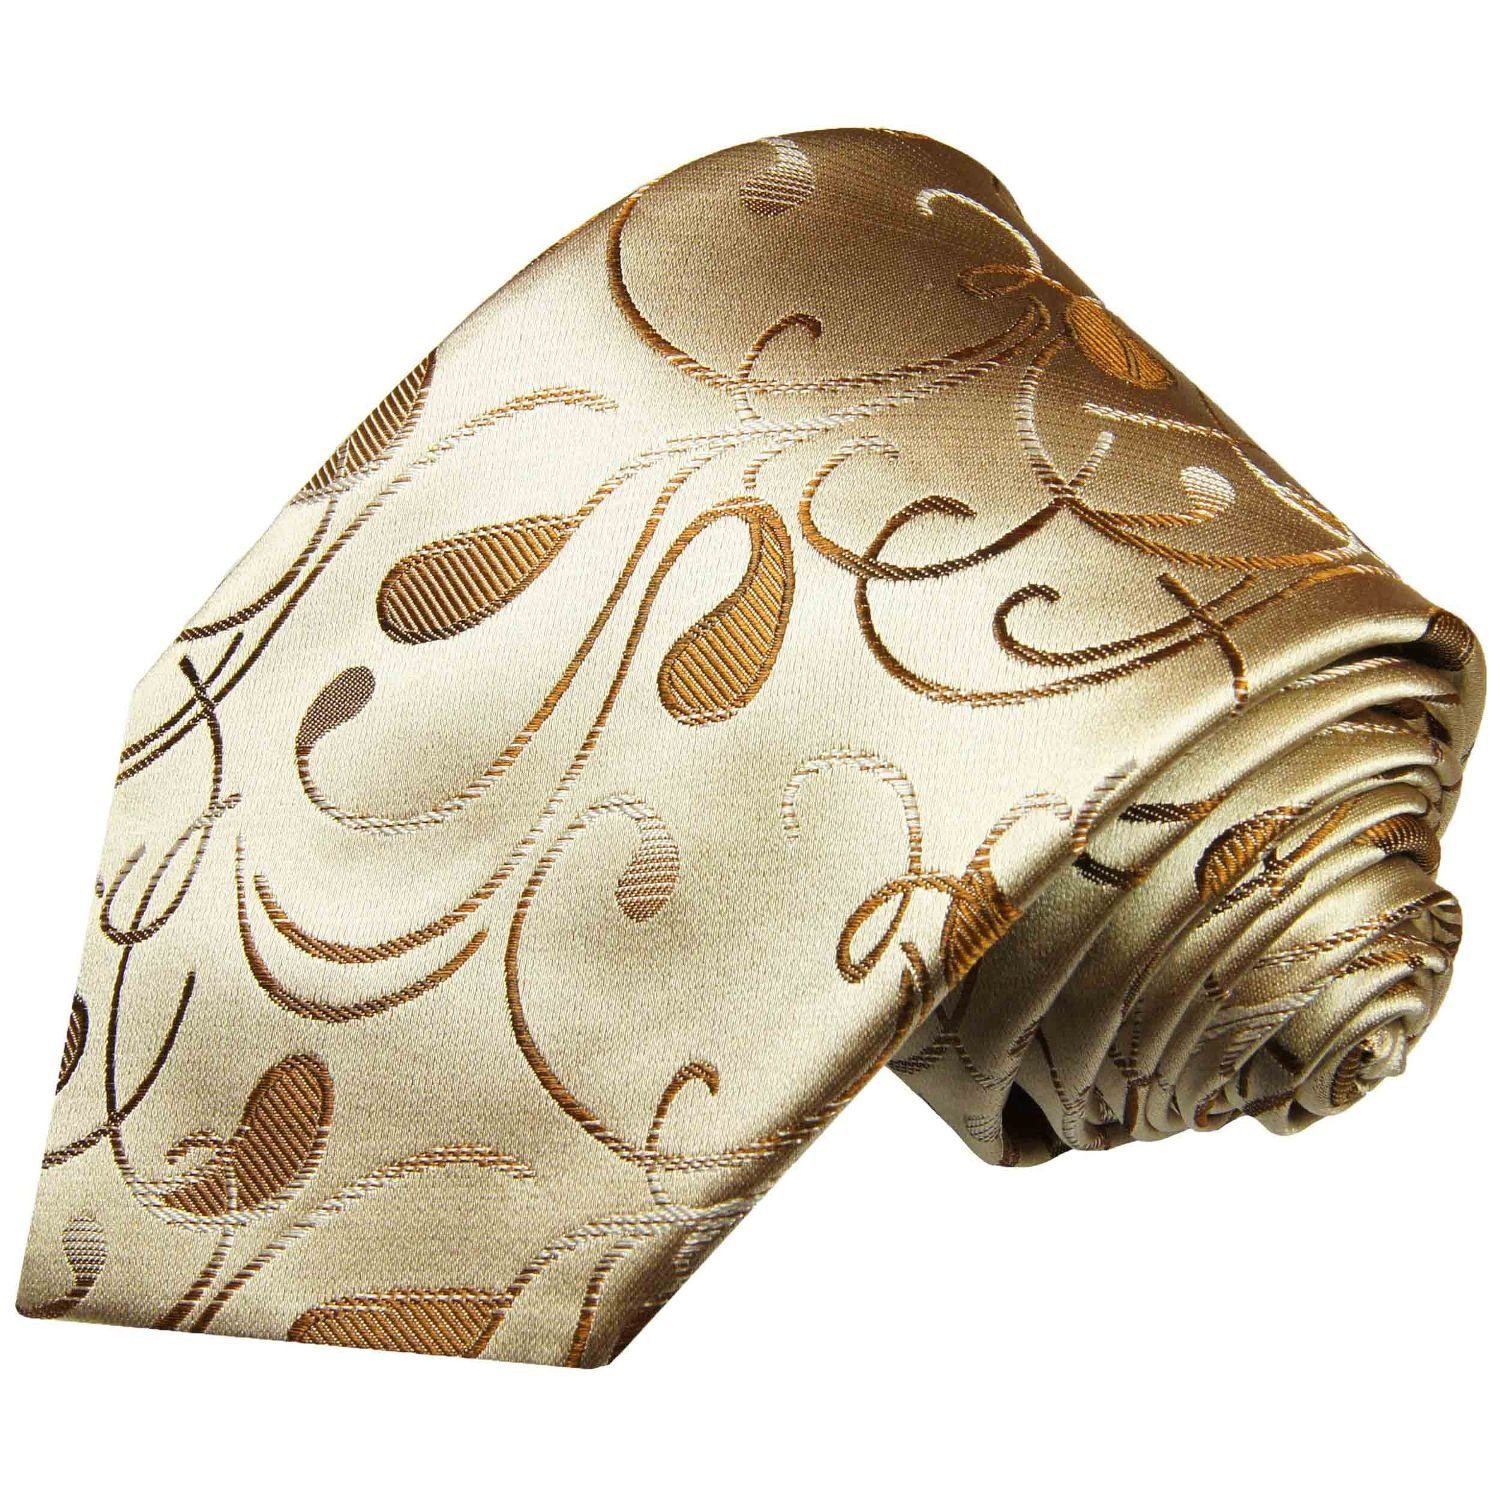 Paul Malone Krawatte Elegante Seidenkrawatte Herren Schlips paisley brokat 100% Seide Breit (8cm), braun gold 915